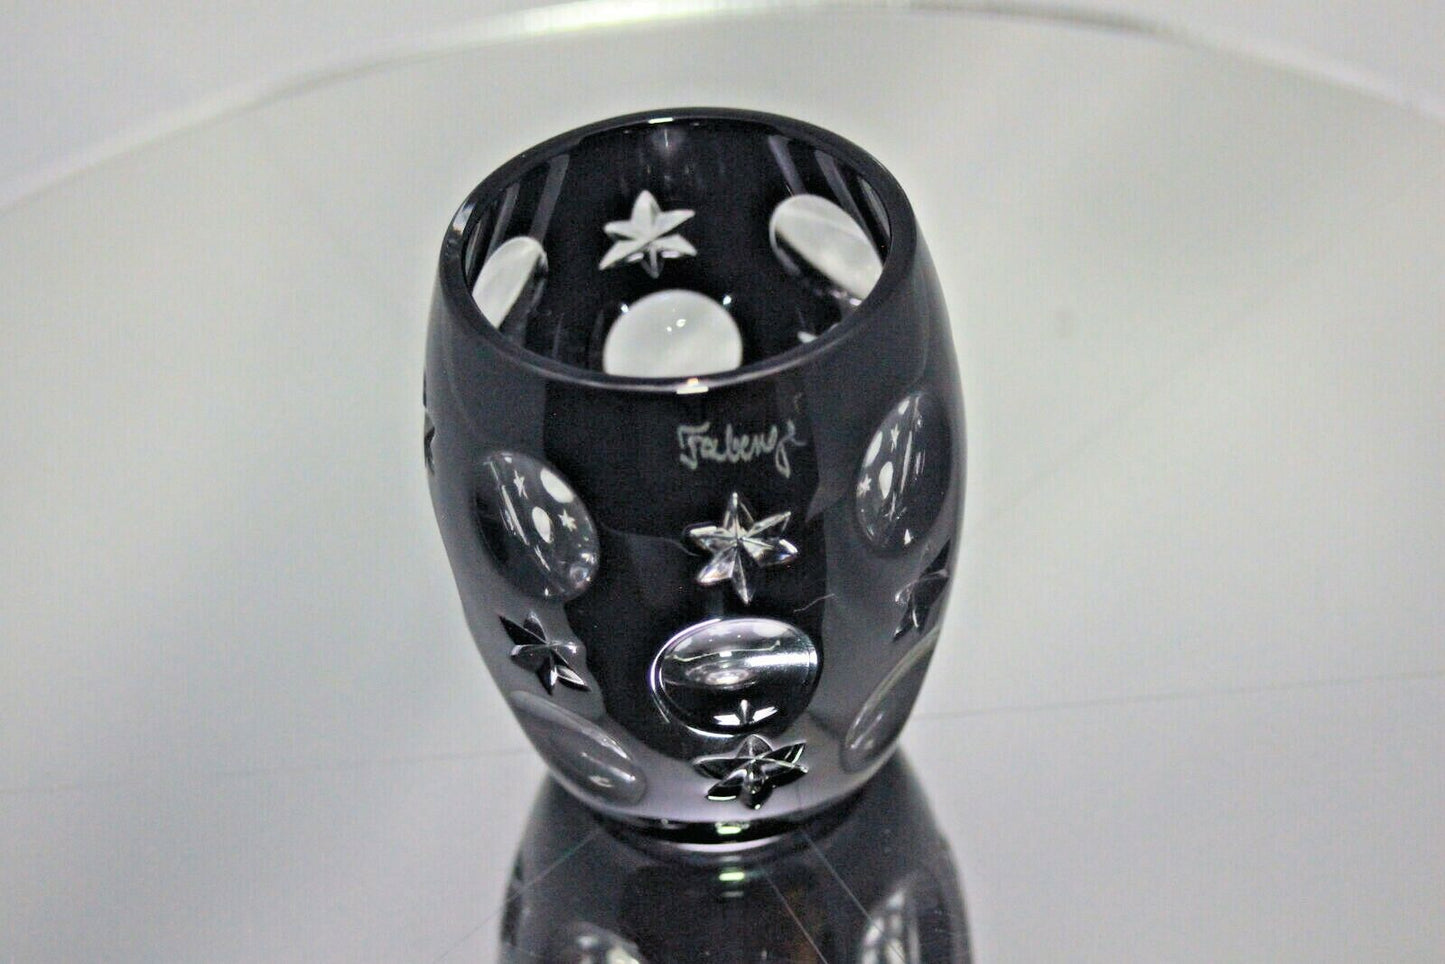 Faberge Galaxy Black Crystal Shot Glass